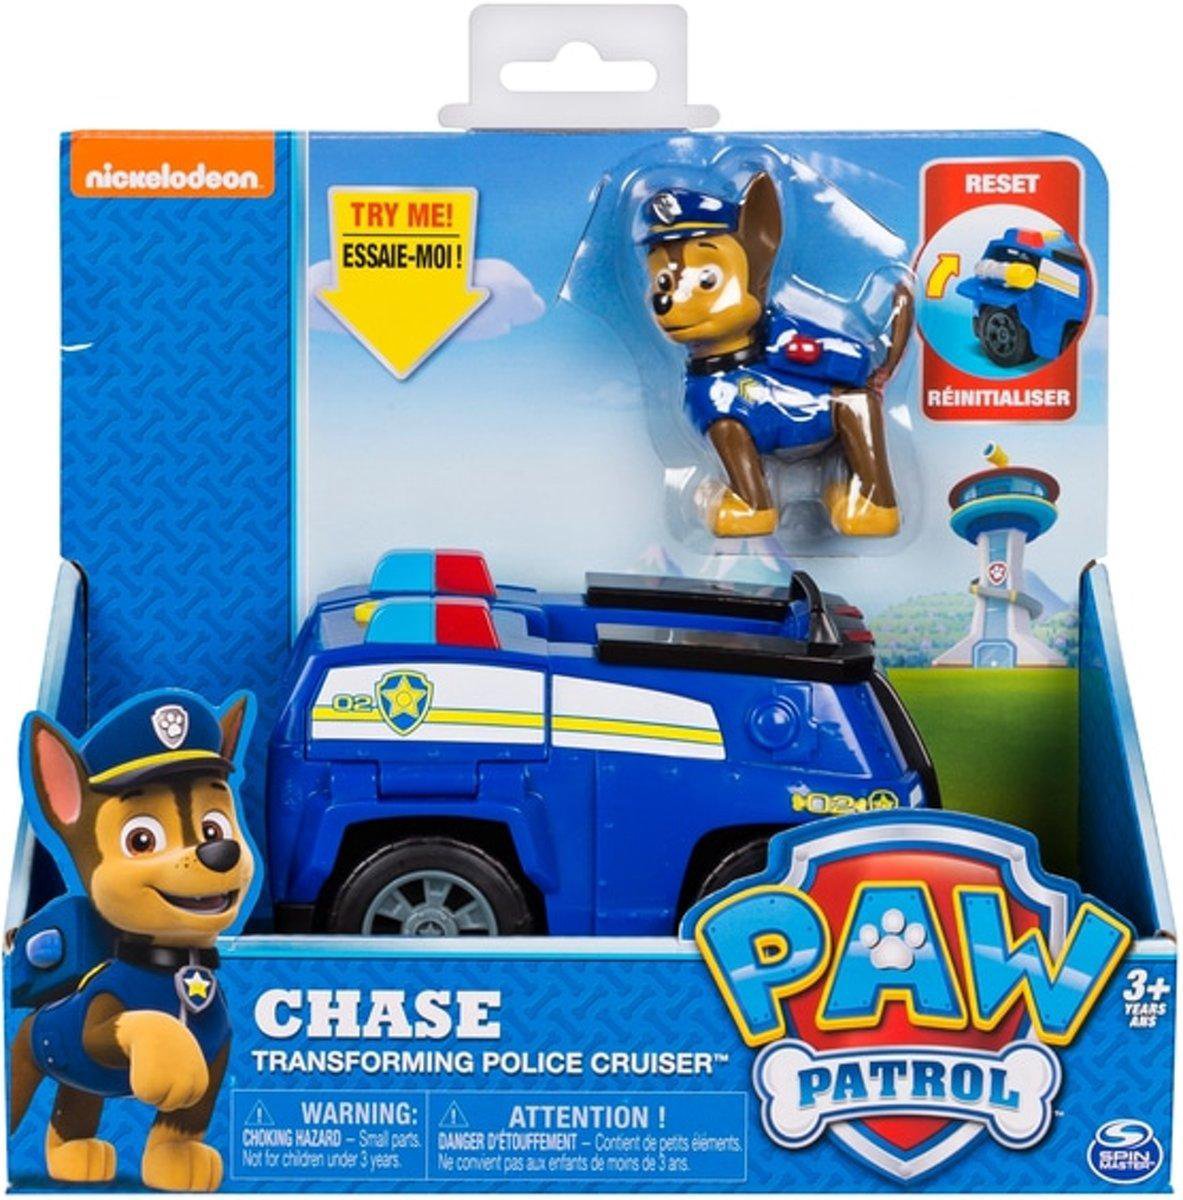 chase paw patrol transformer